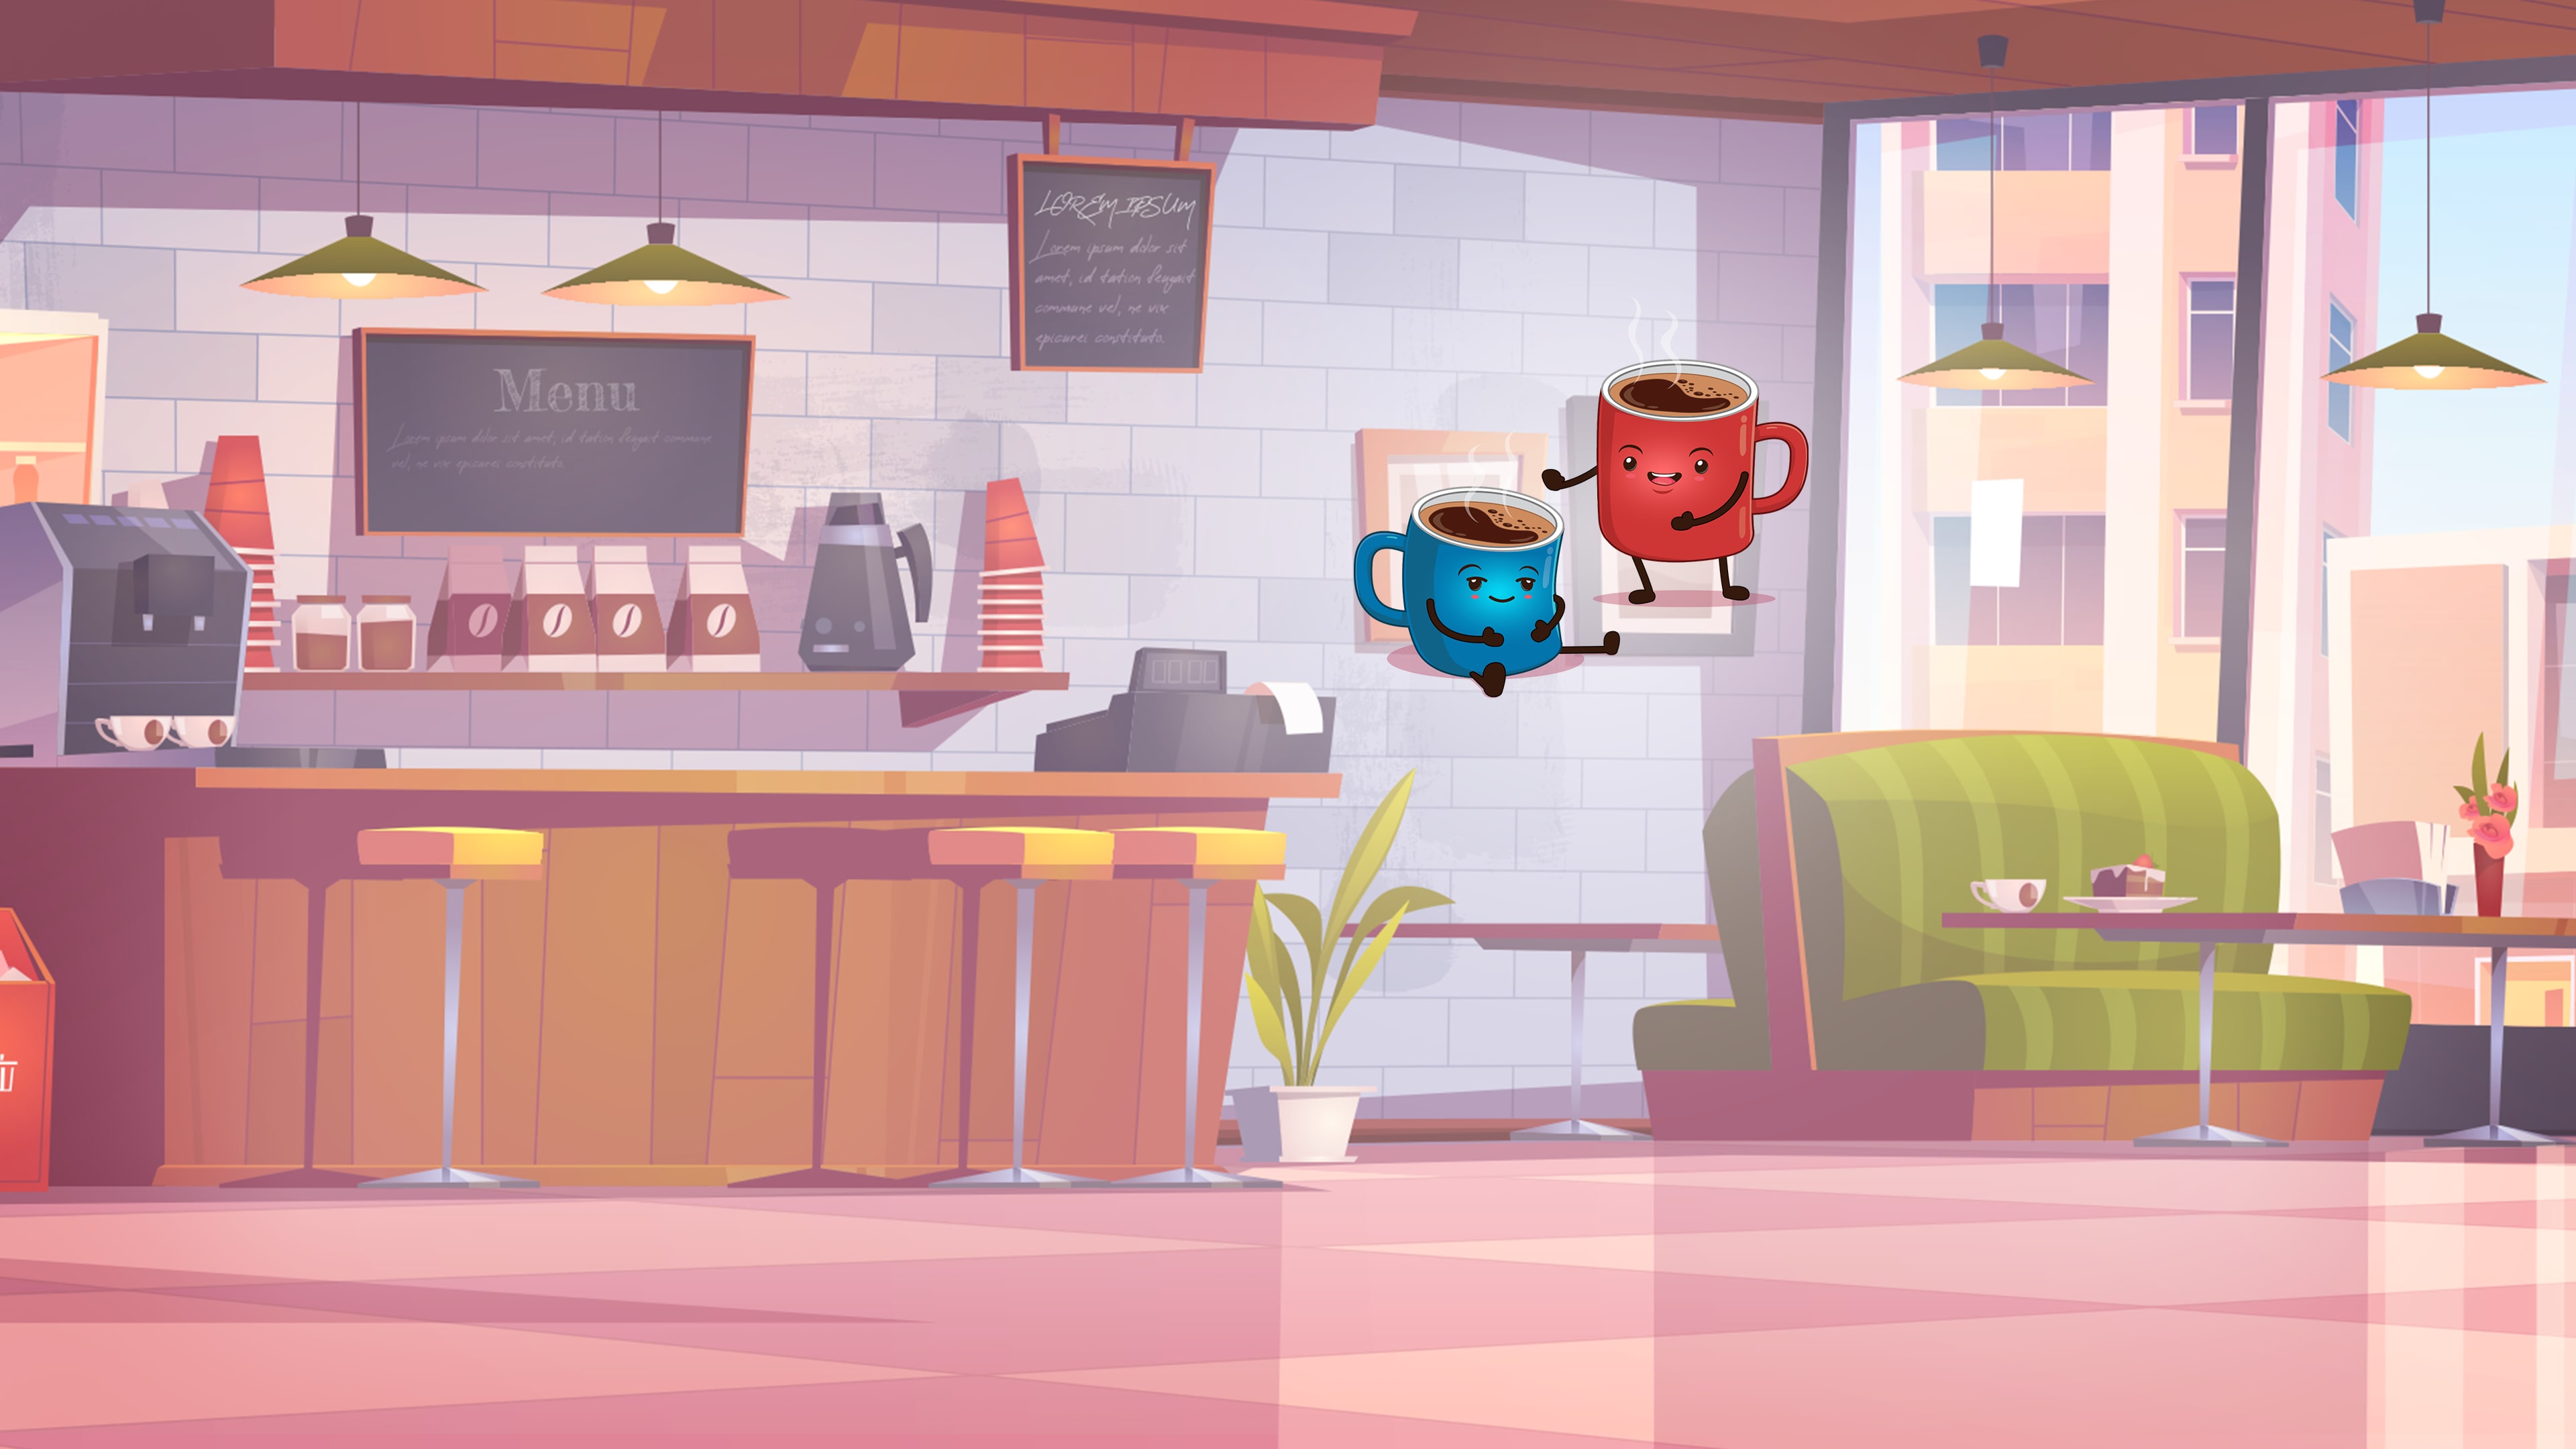 Coffee Break - Avatar Full Game Bundle